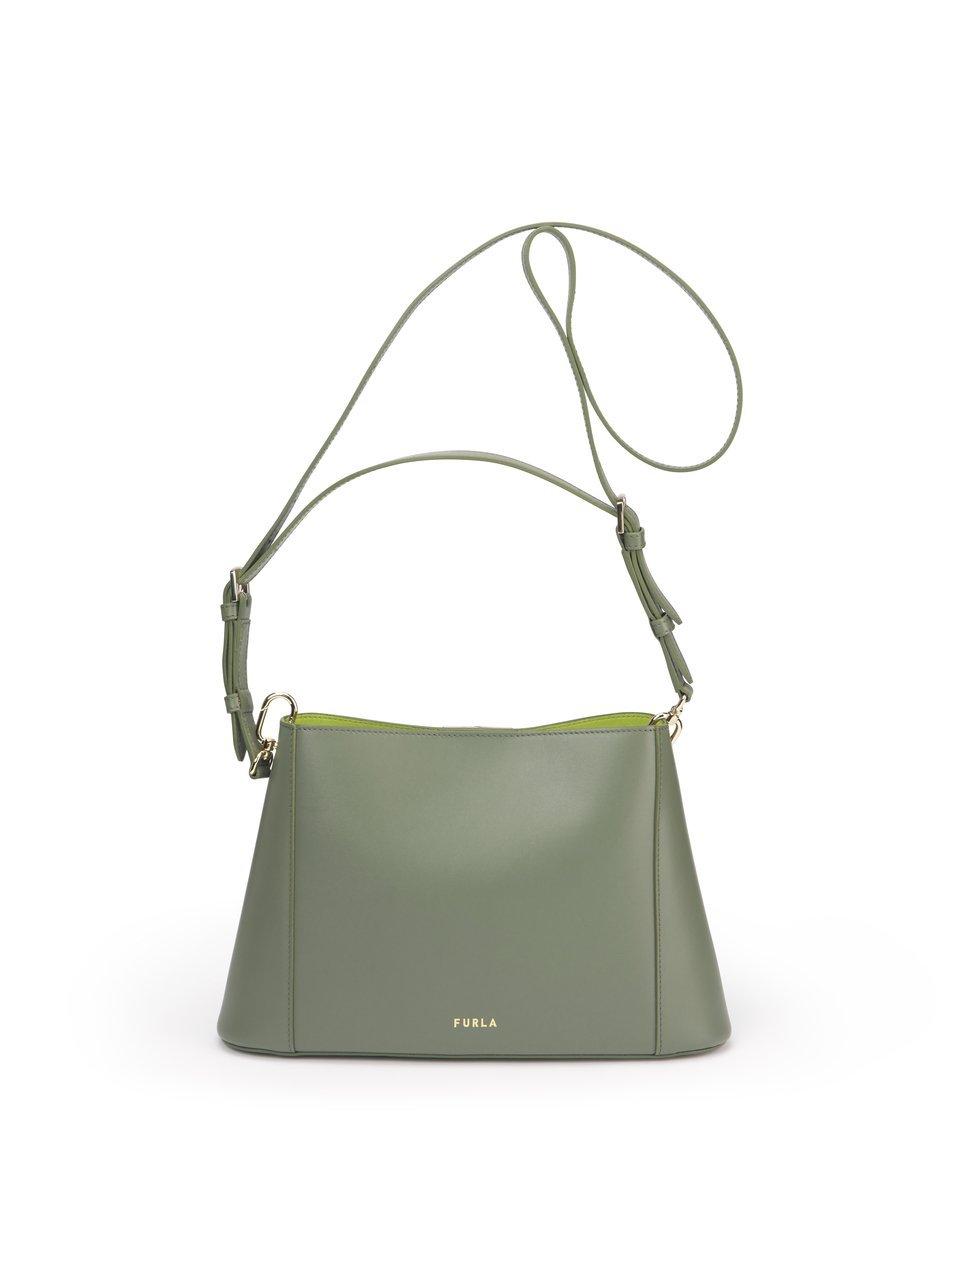 Image of Hand bag “Fleur“ Furla green